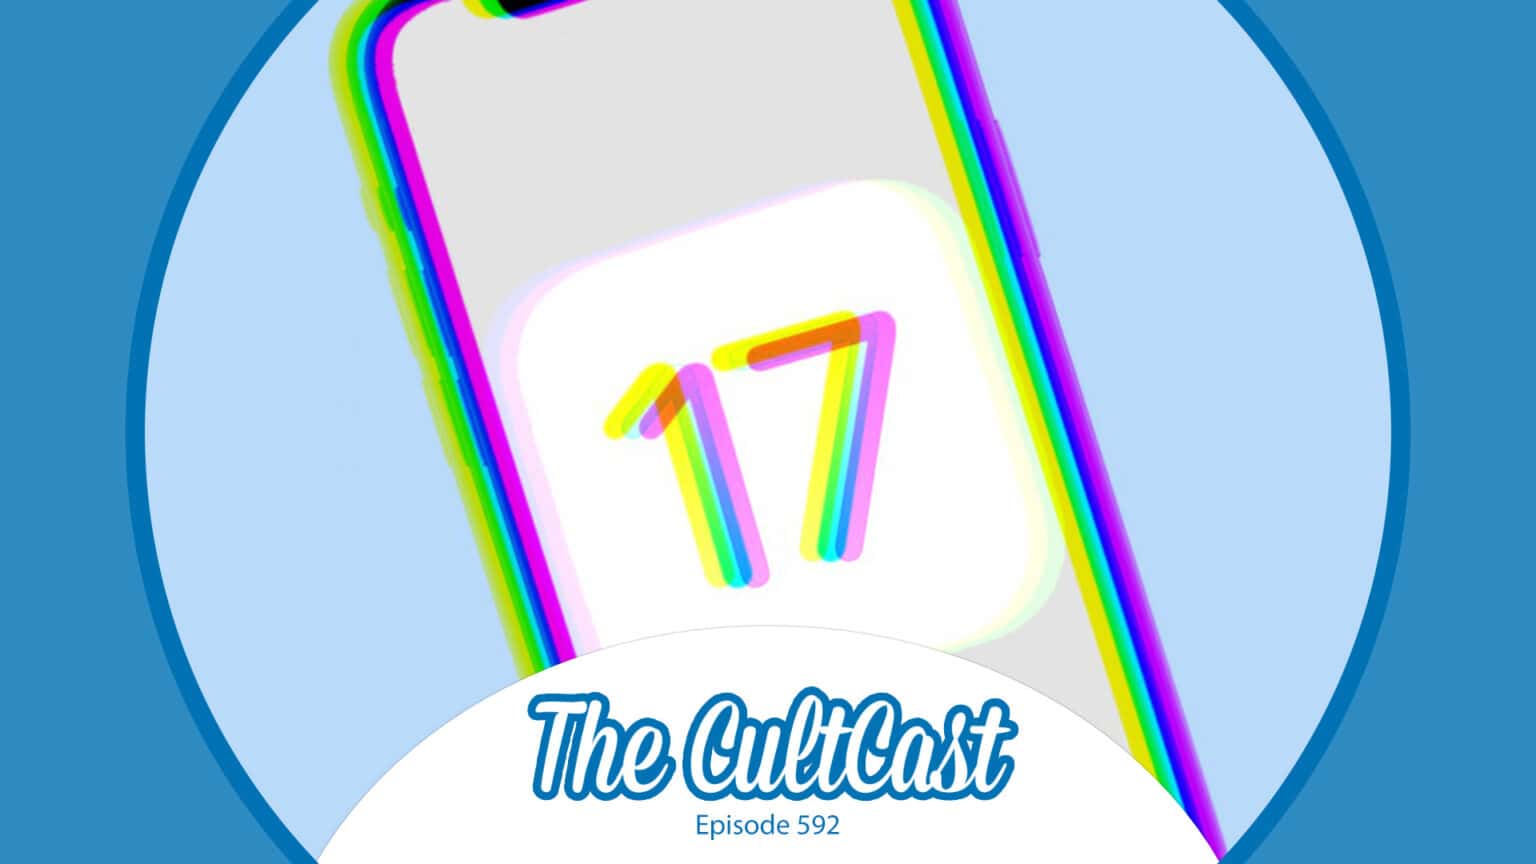 iOS 17 mockup and The CultCast logo